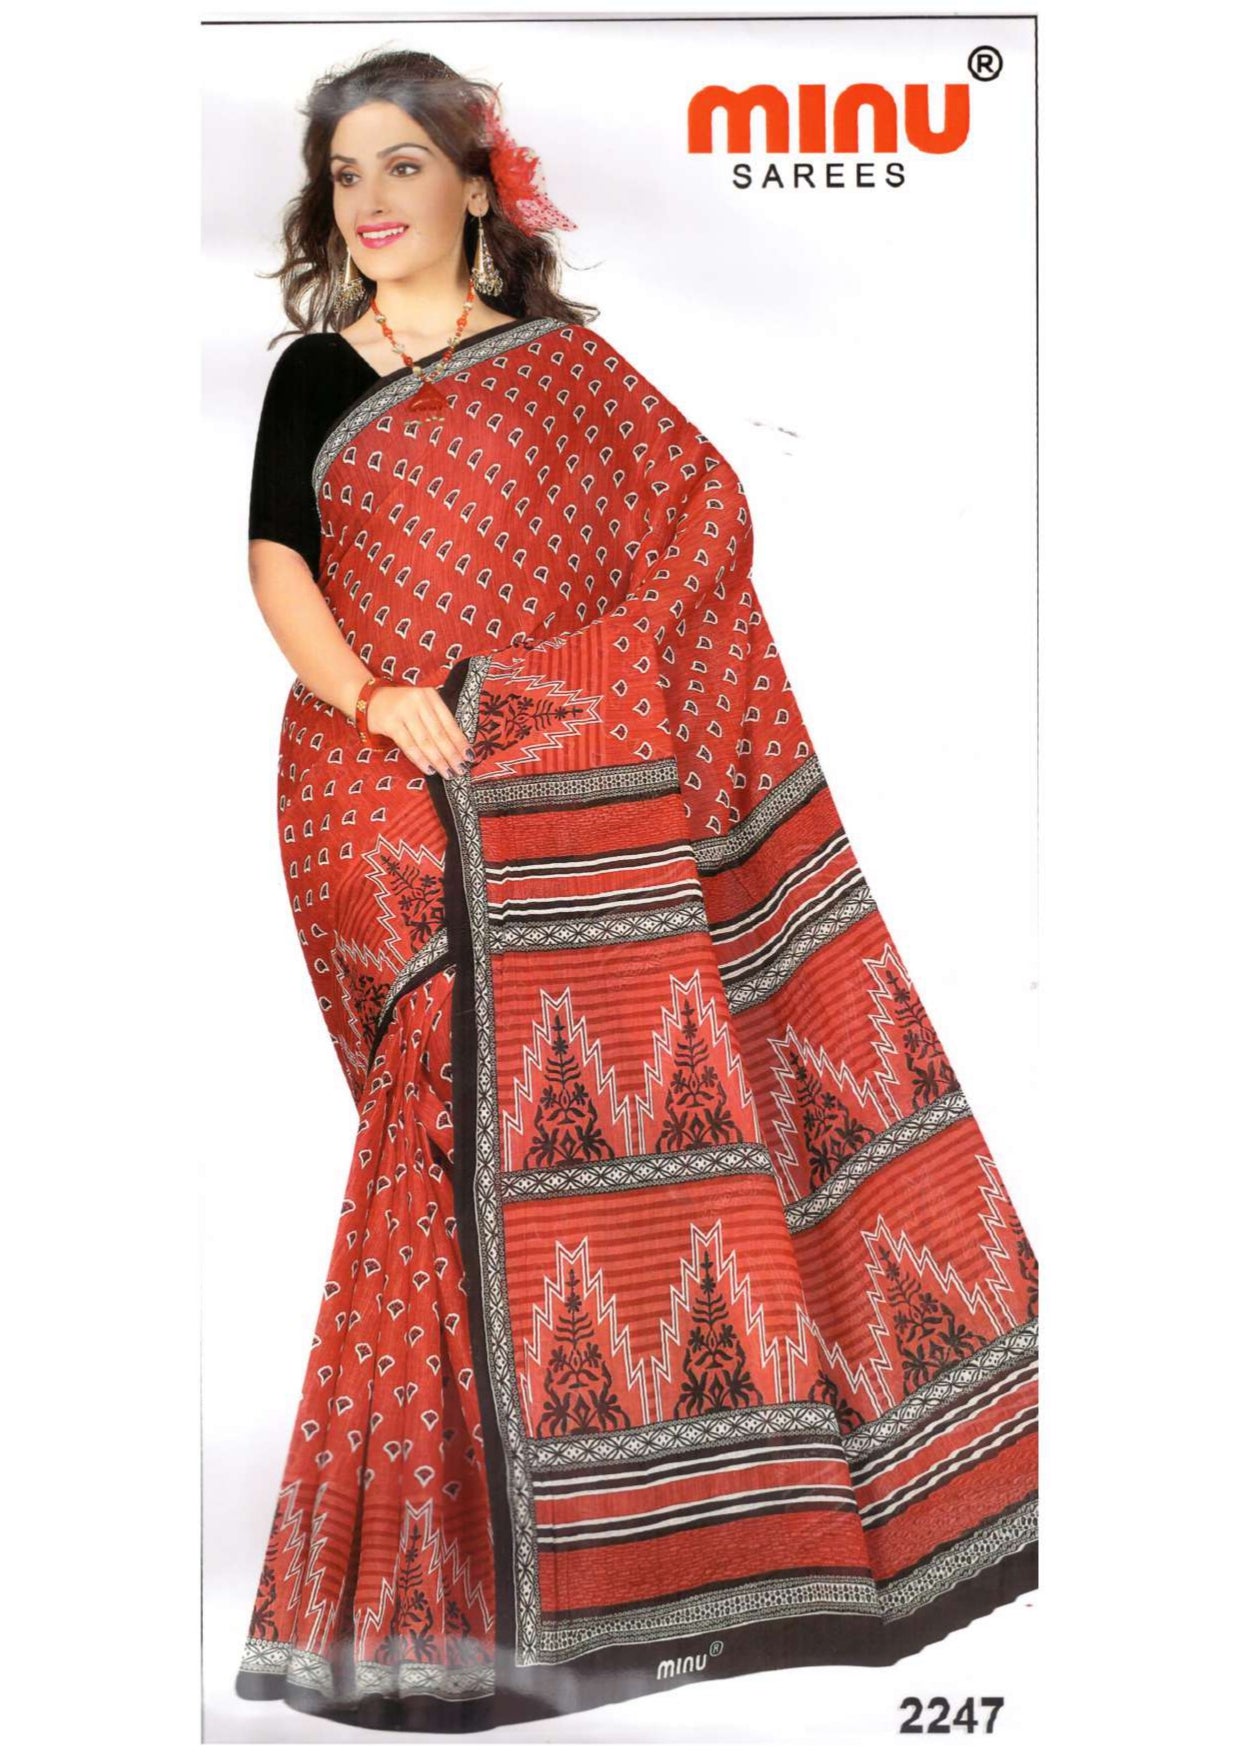 Red printed saree wearing woman